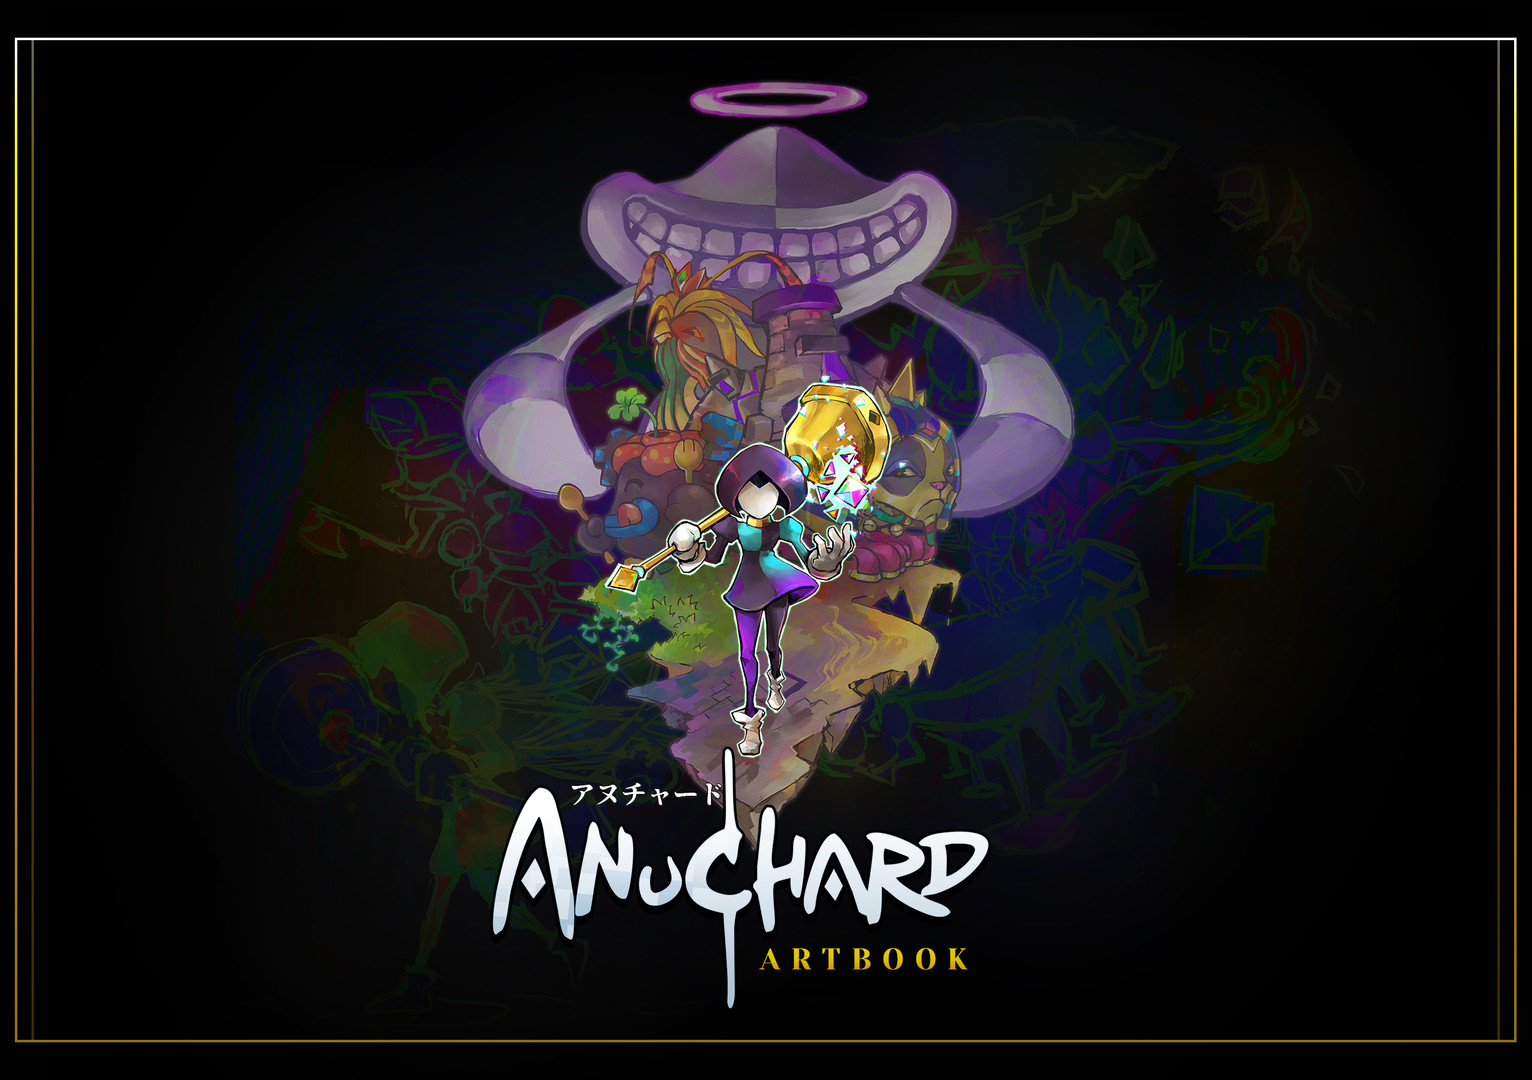 Anuchard - Artbook Featured Screenshot #1